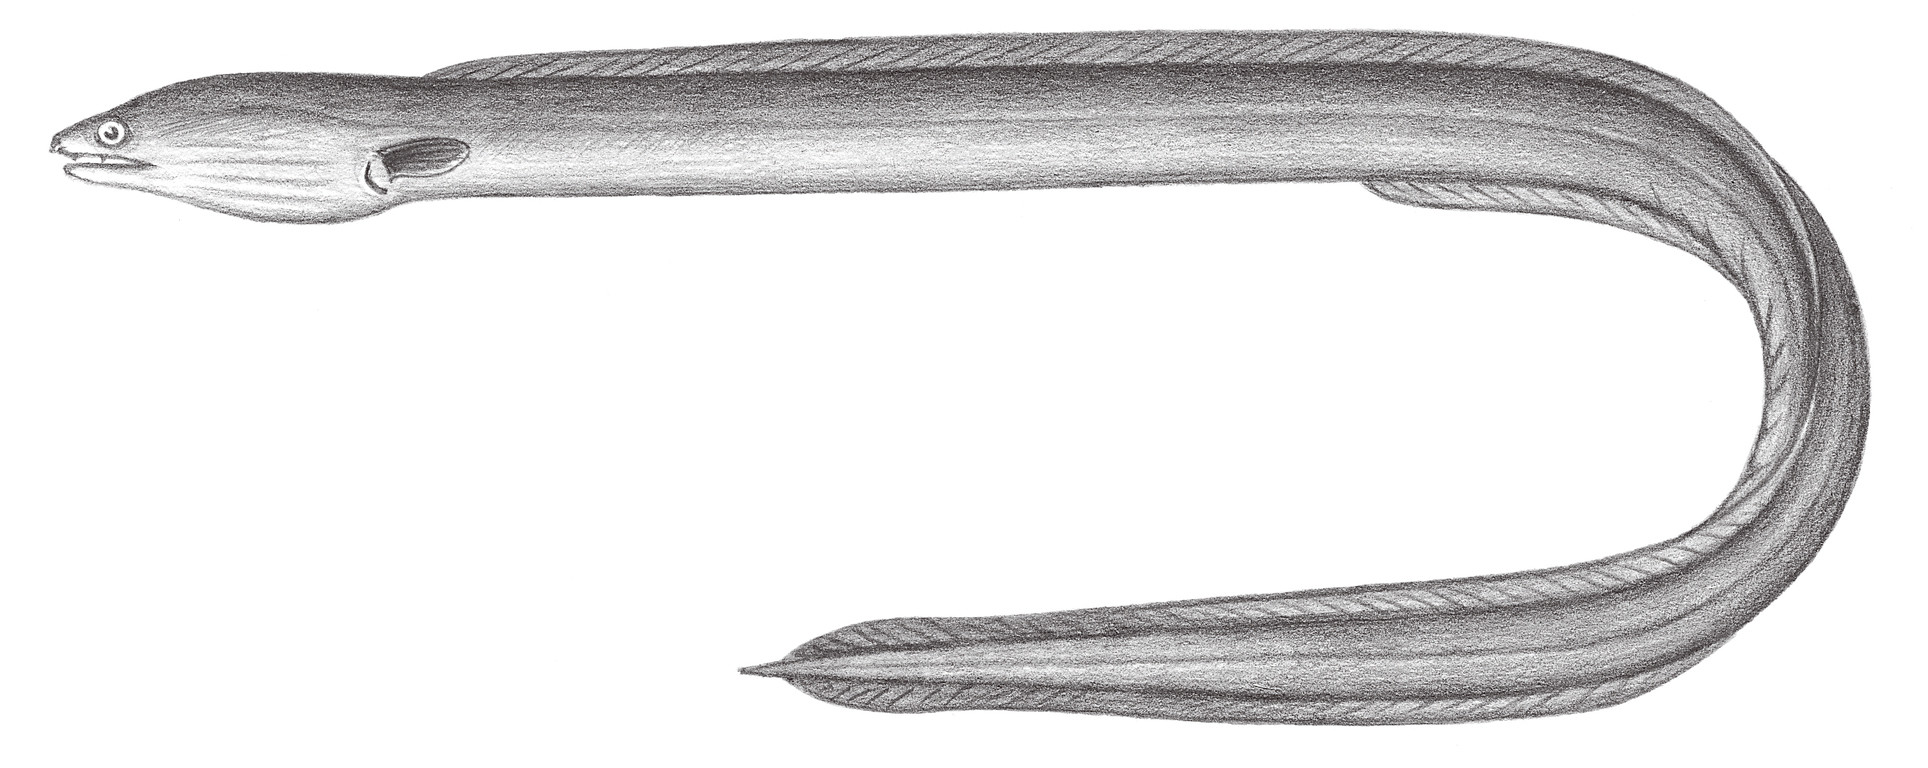 260.	食蟹荳齒鰻 Pisodonophis cancrivorus (Richardson, 1844)